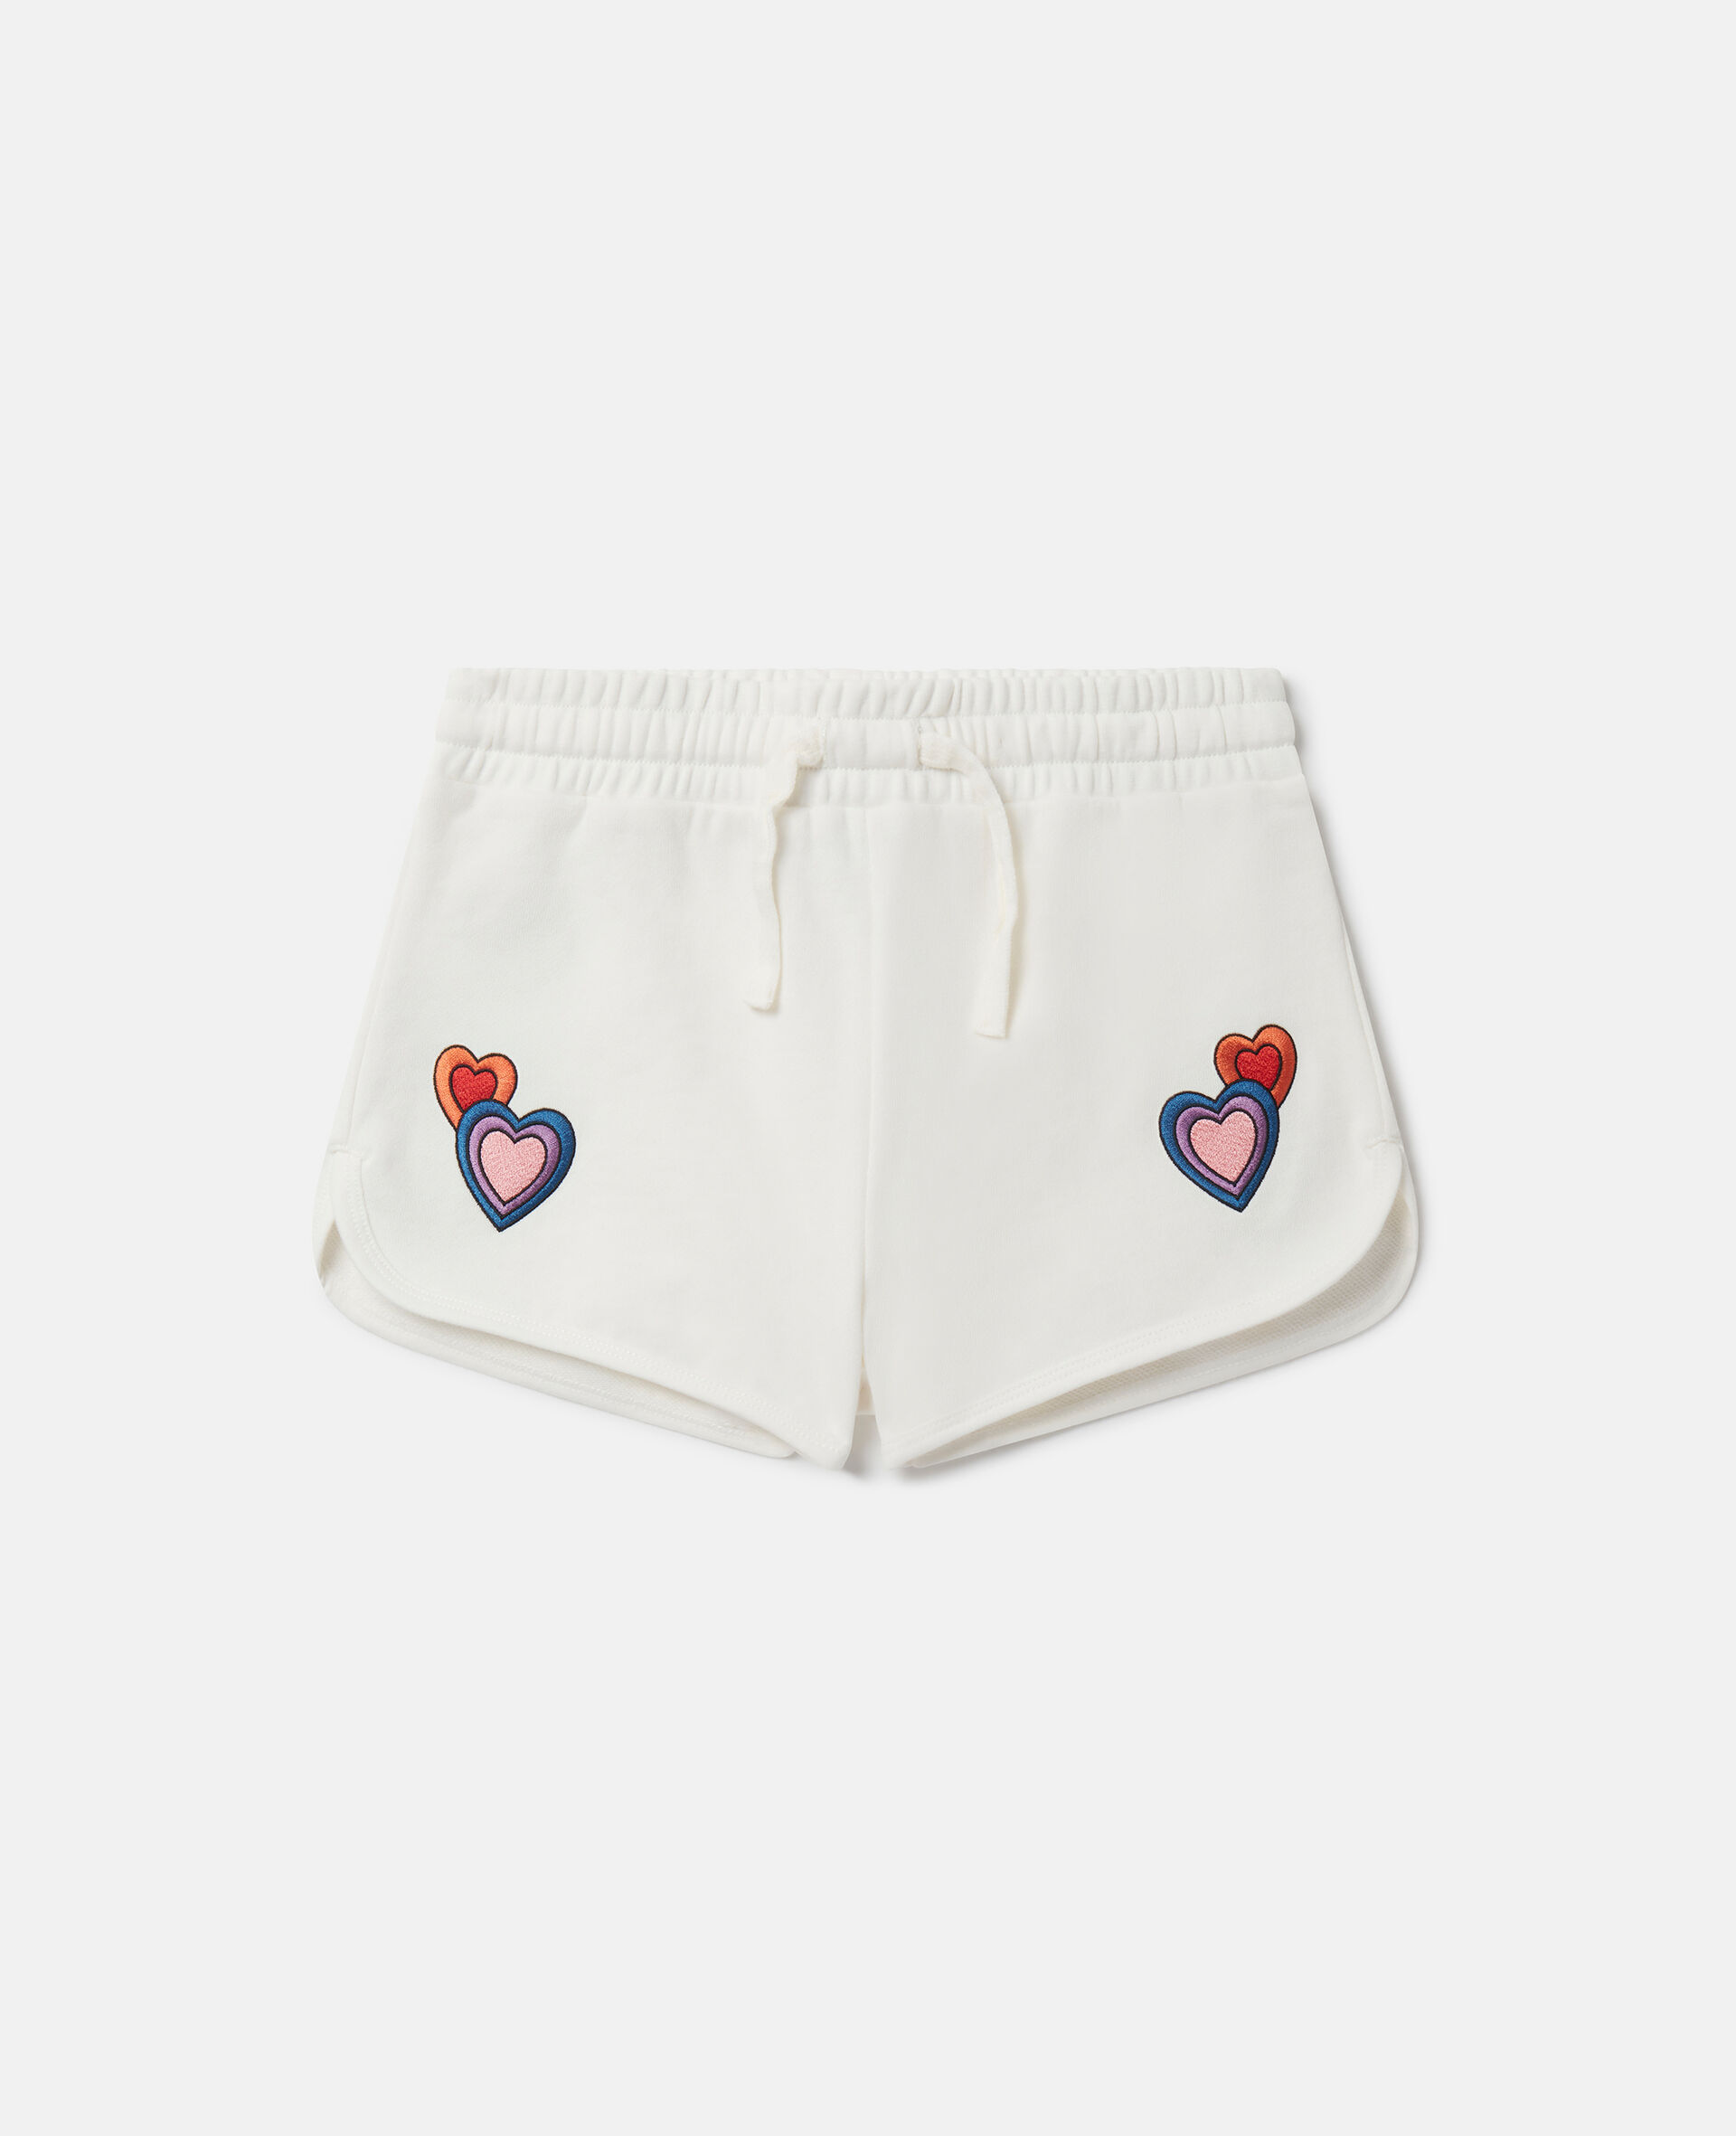 I Love You Embroidered Shorts-Multicolour-medium